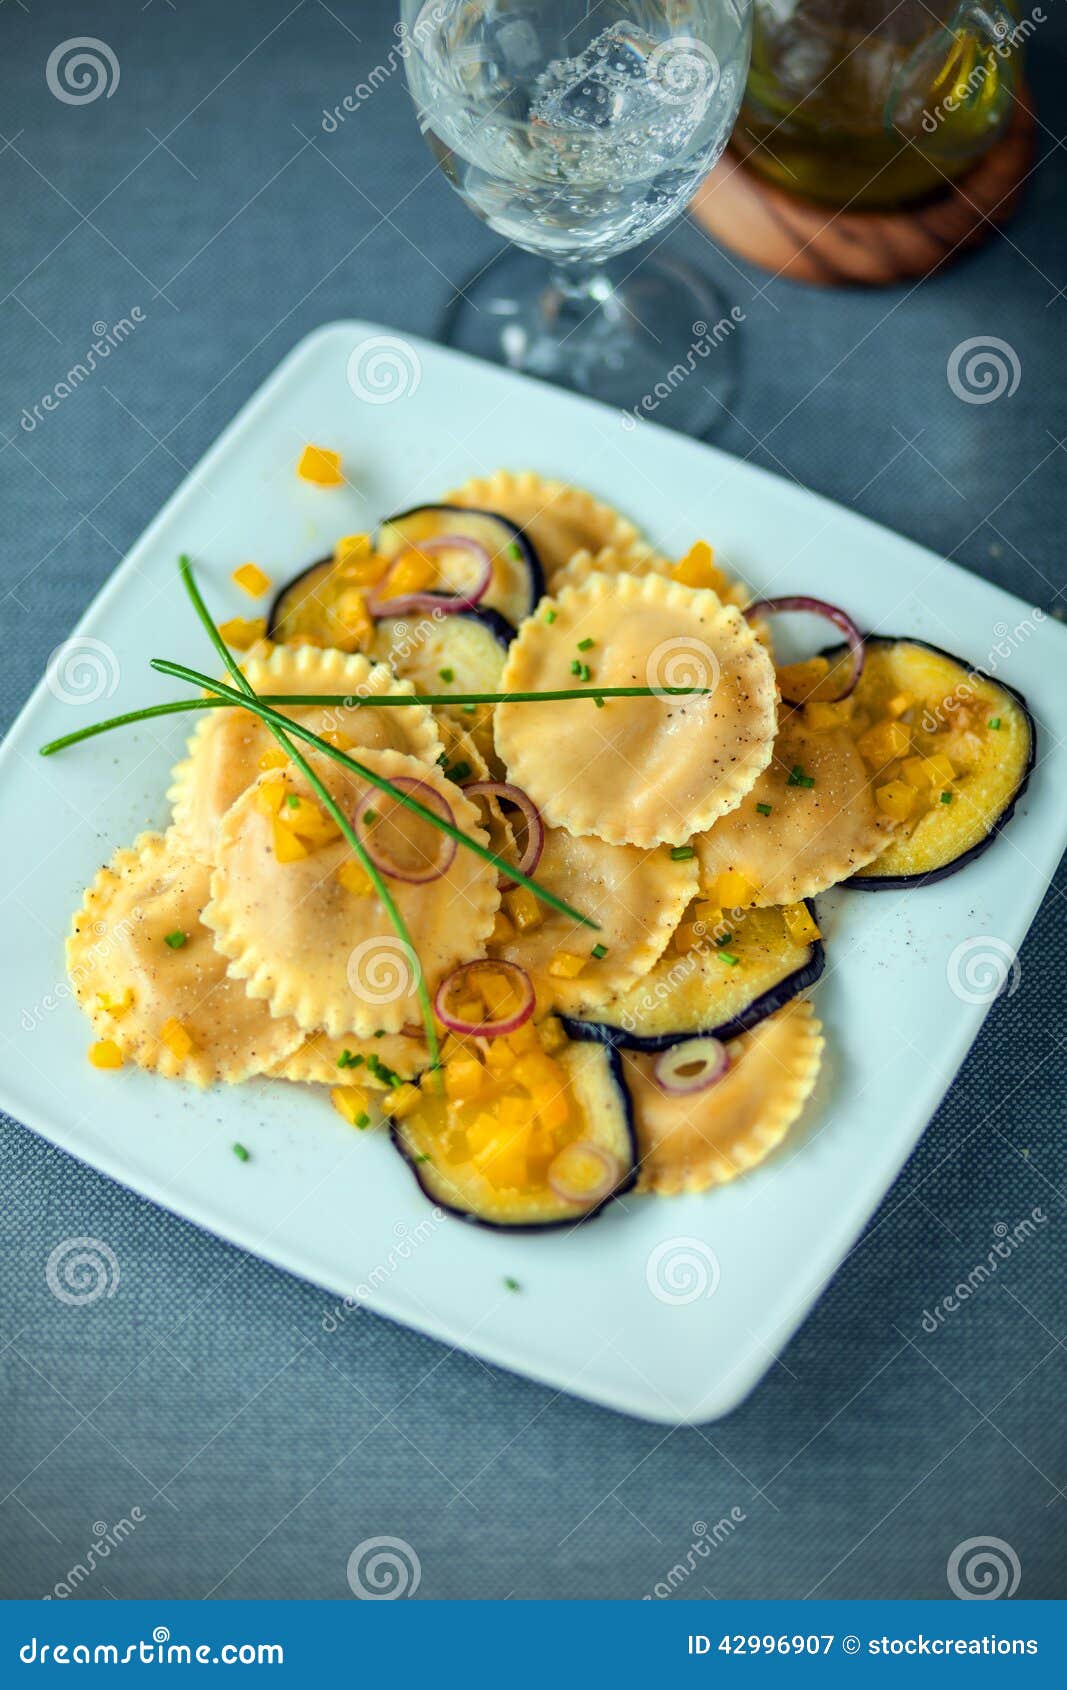 tasty vegetarian cuisine with ravioli and eggplant